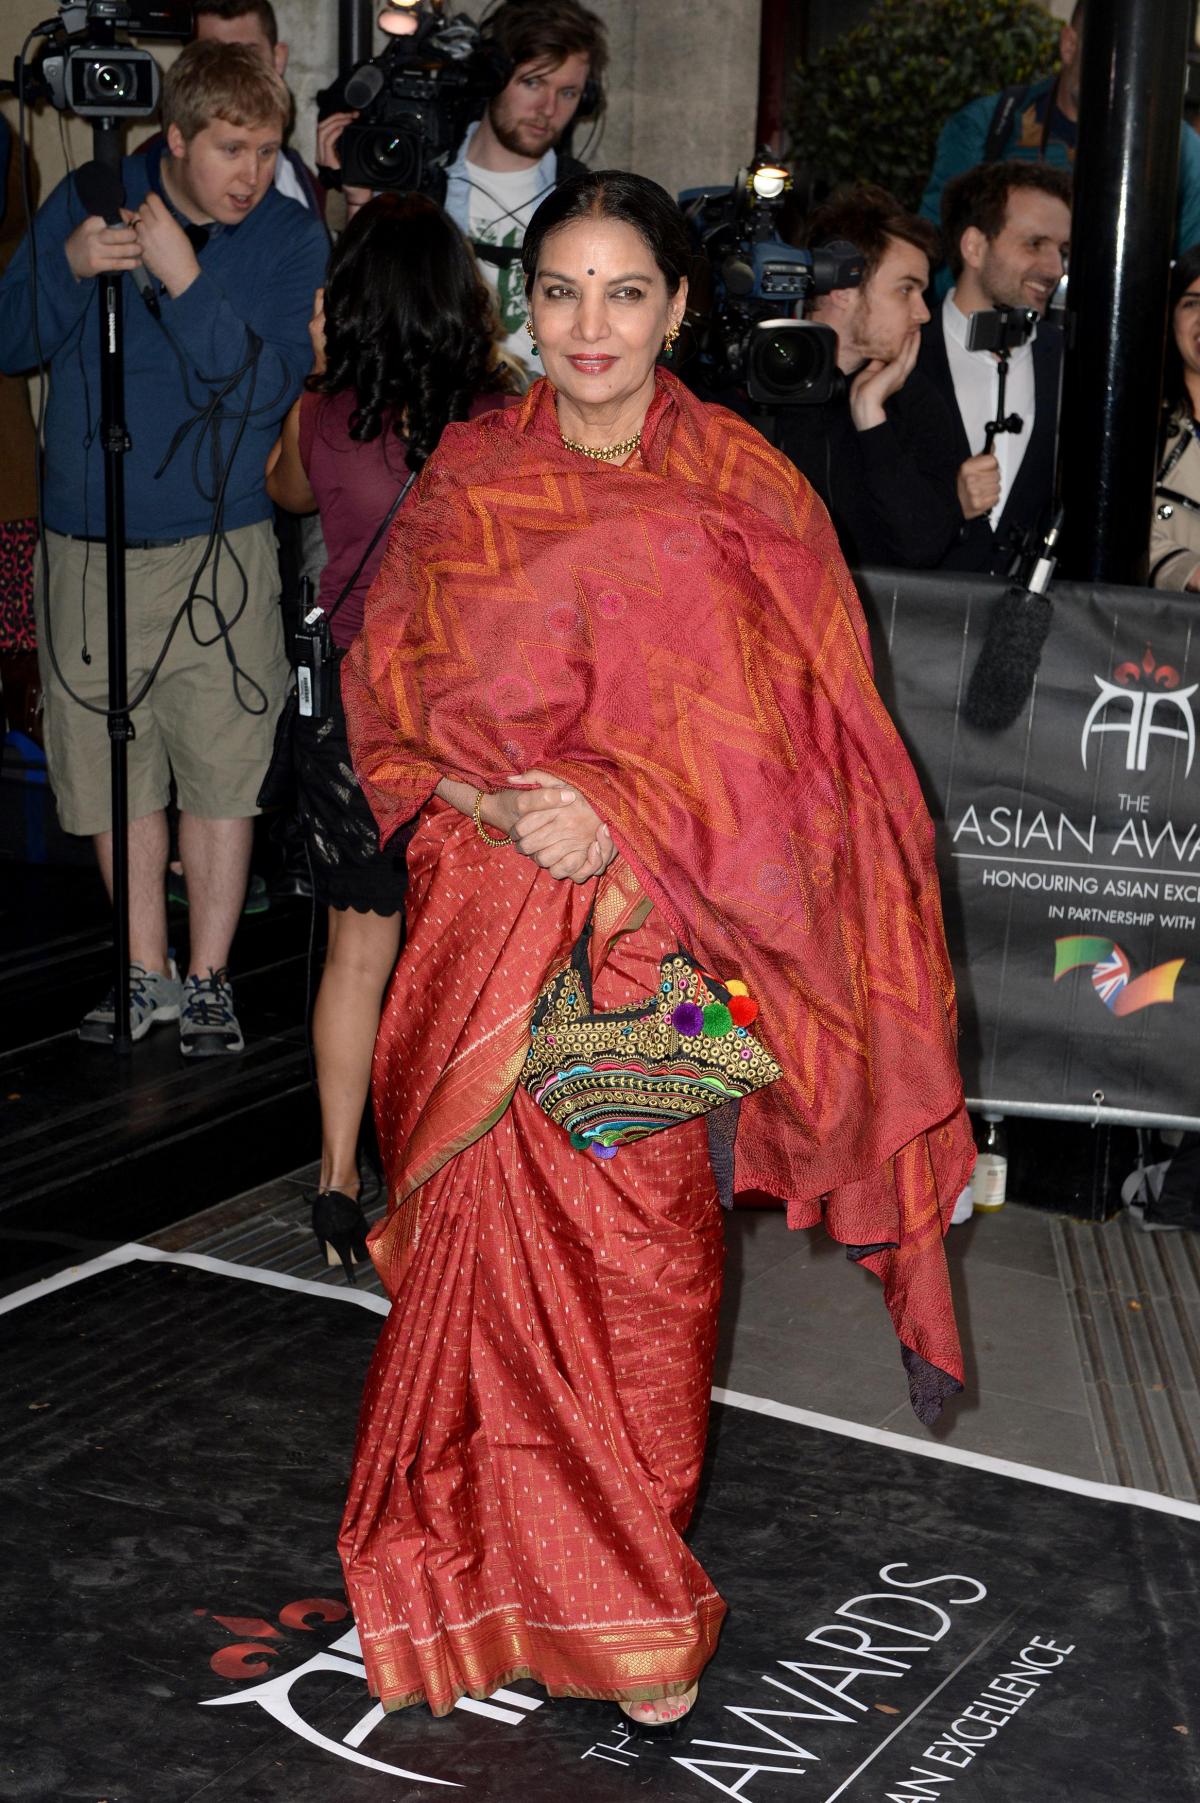 Shabana Azmi attending the 2015 British Asian Awards at The Grosvenor House Hotel, London.